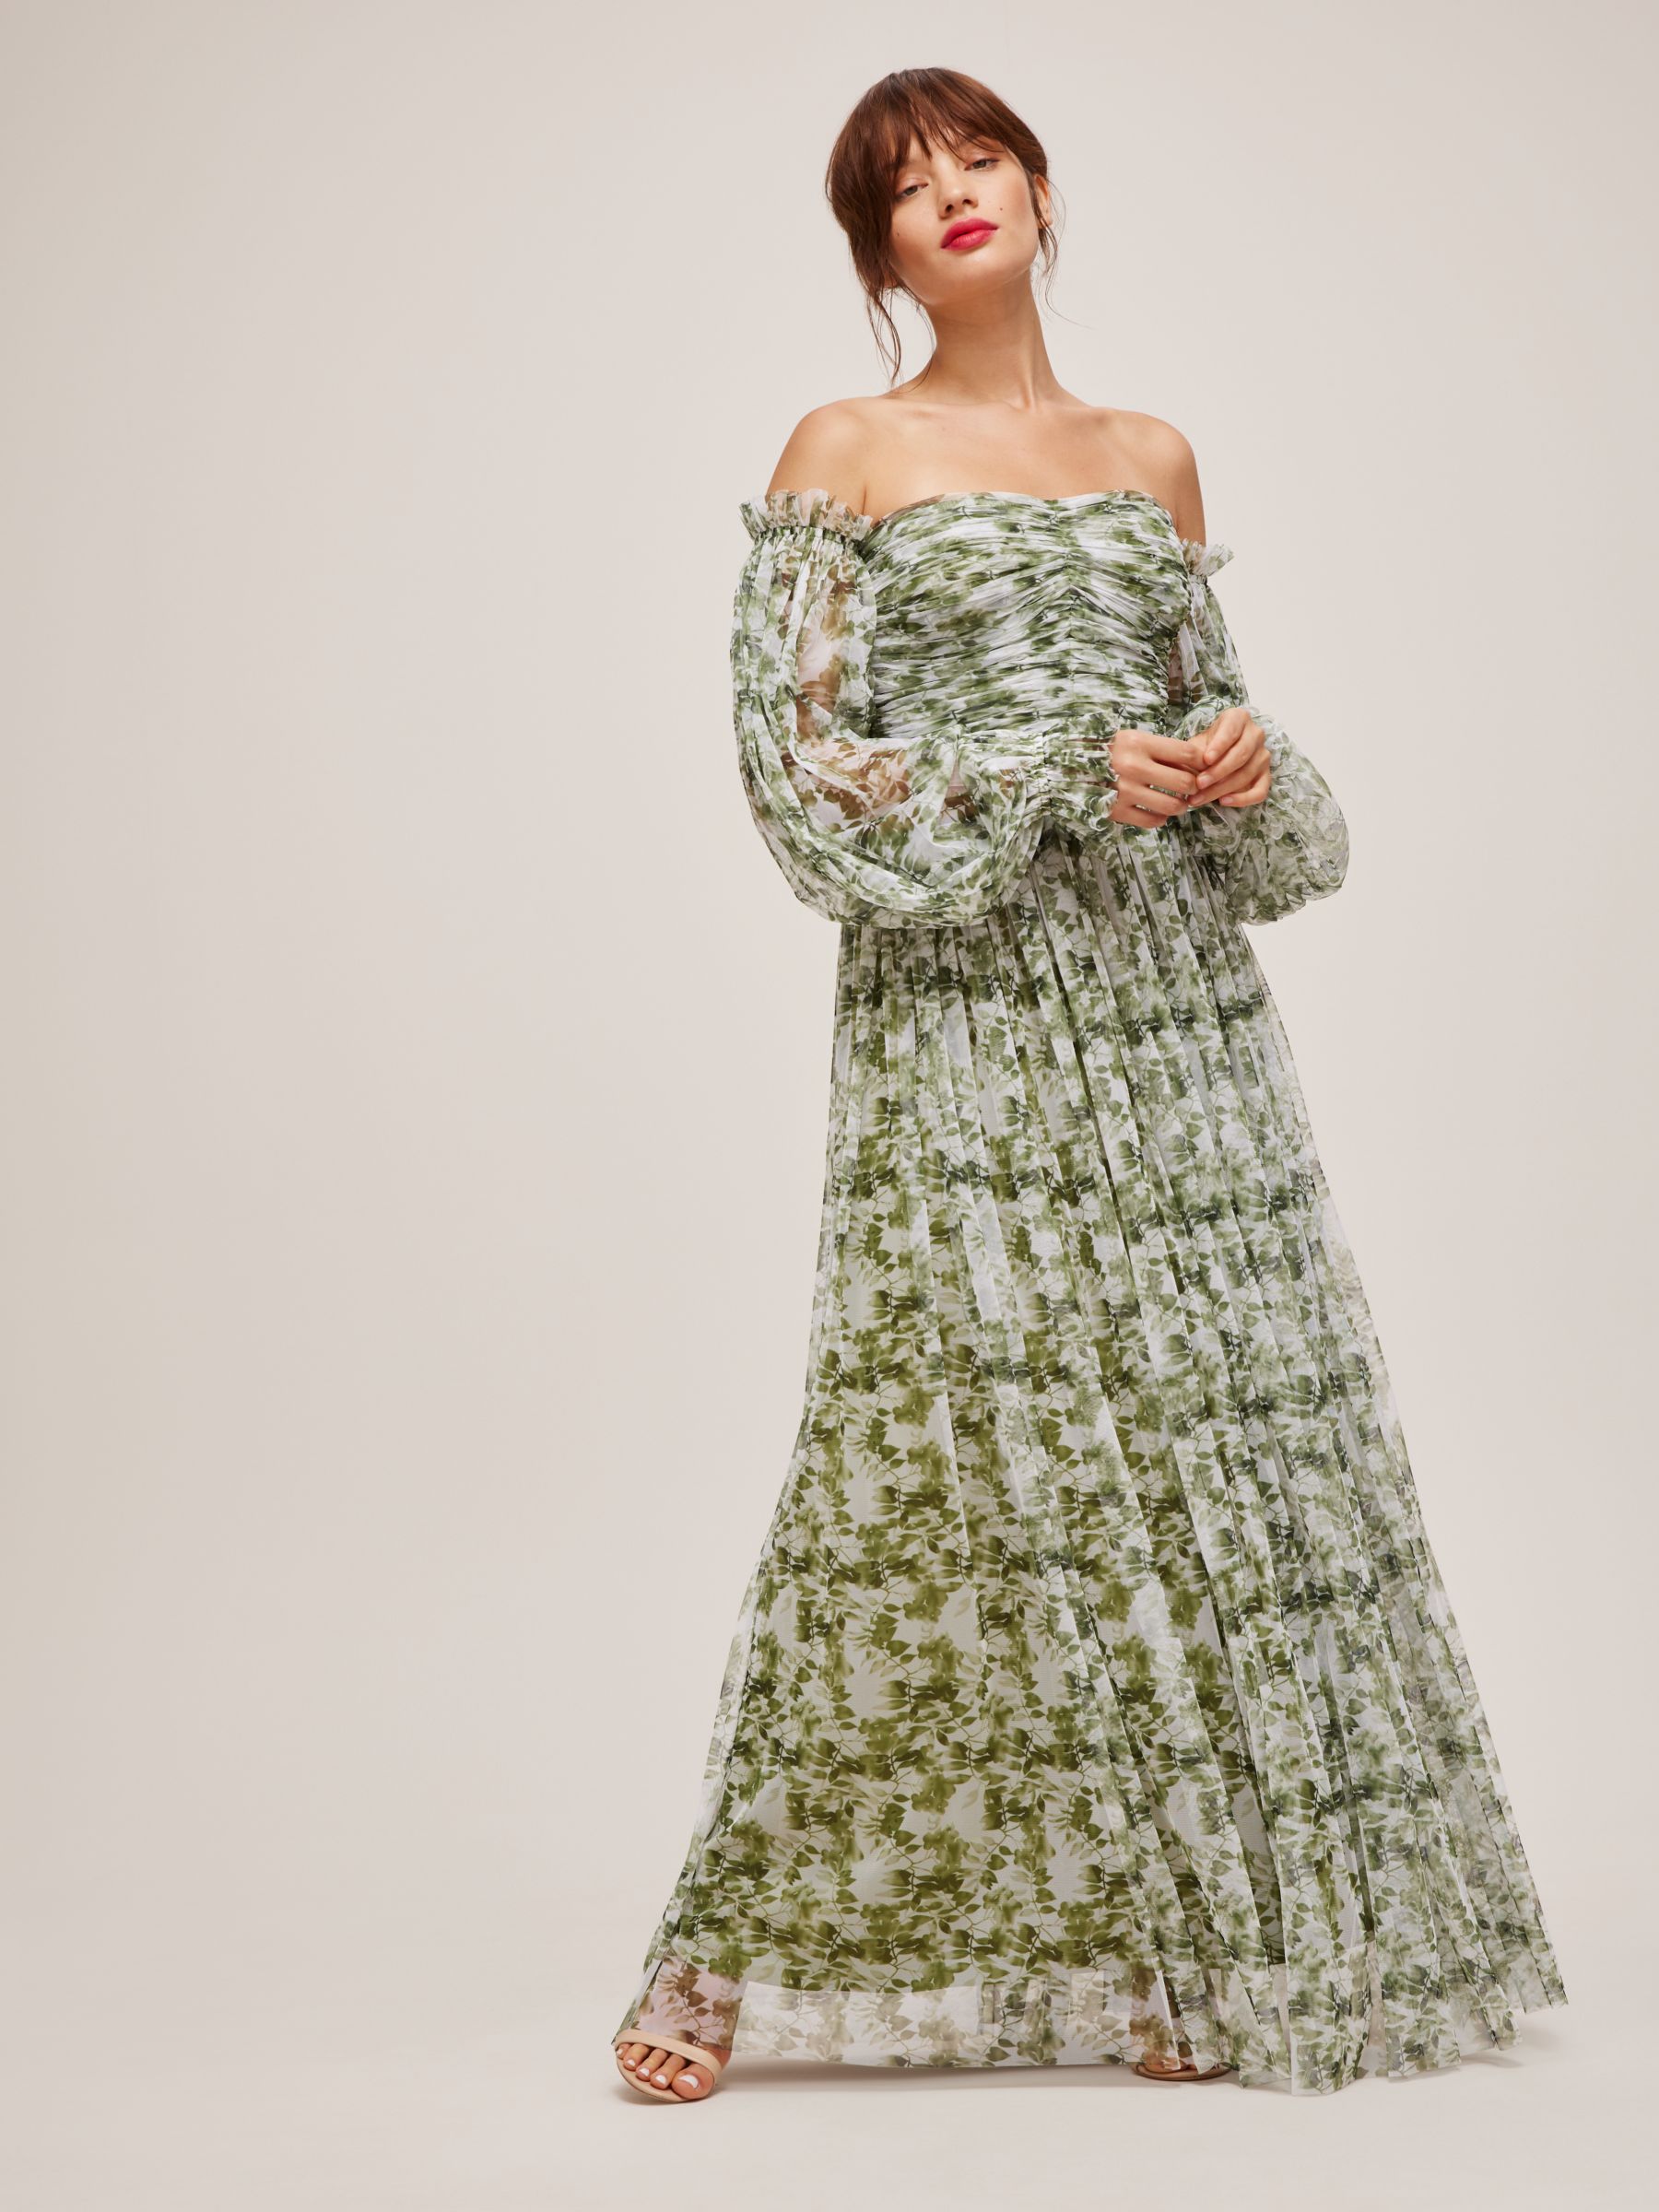 Lace & Beads Lana Floral Print Off Shoulder Maxi Dress, Green, 8